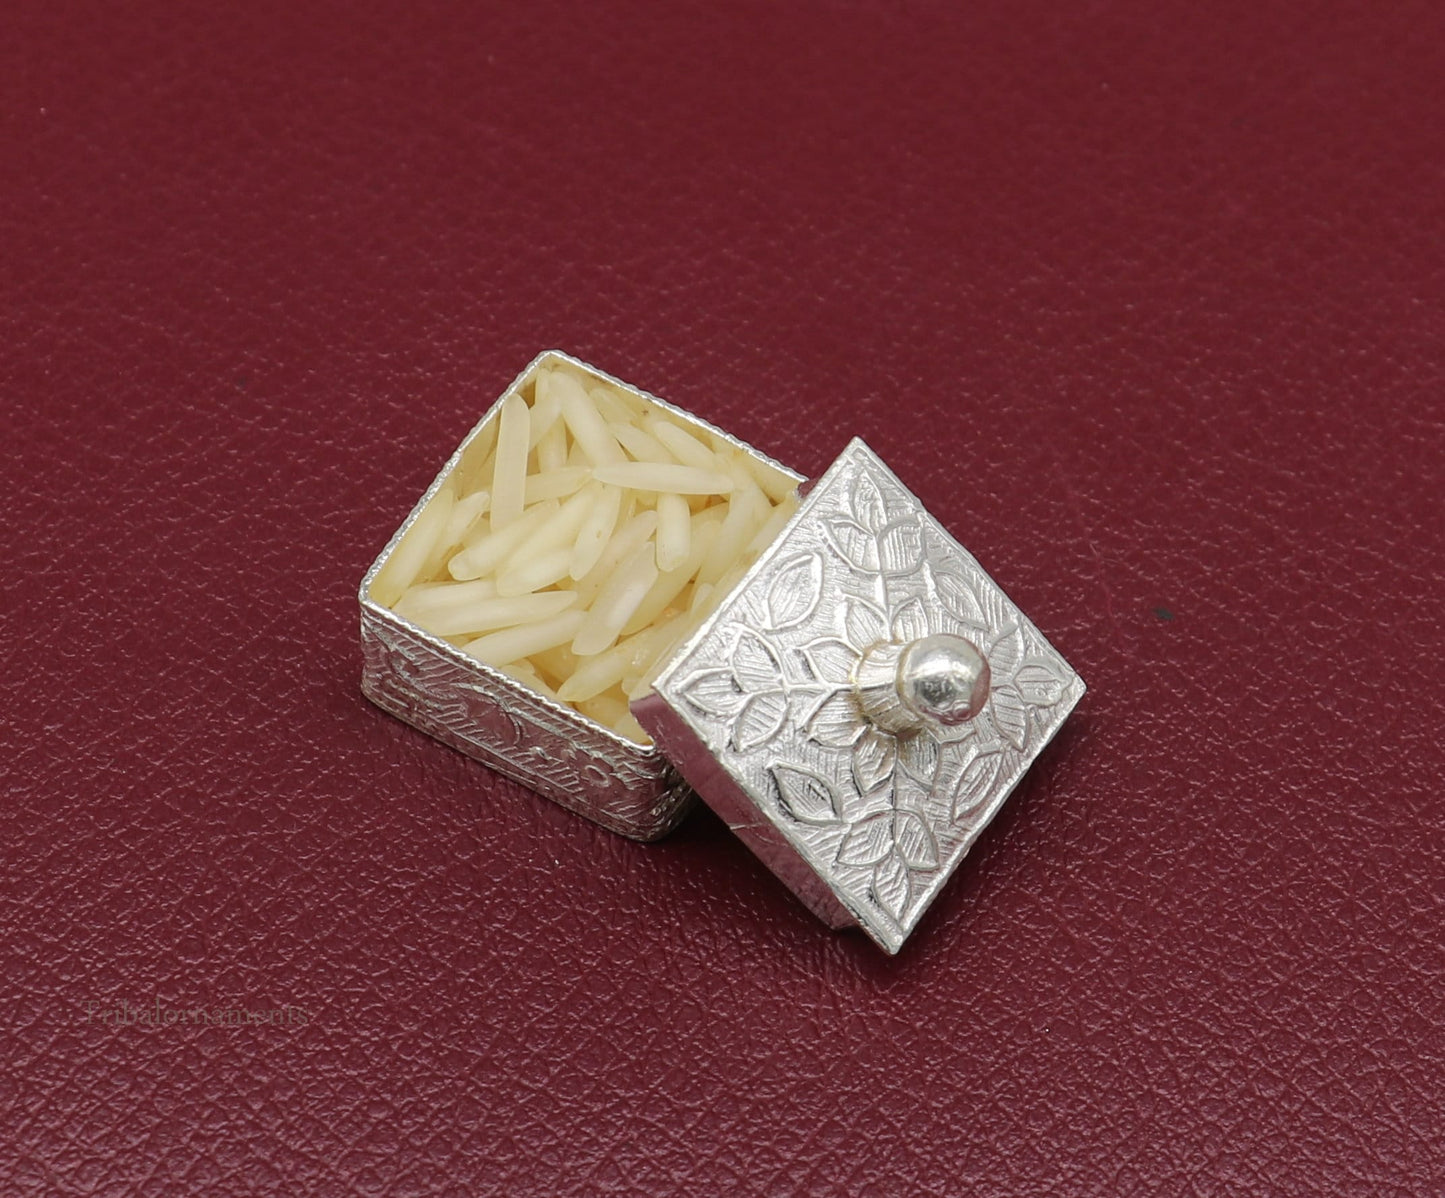 925 sterling silver trinket box, kajal box/casket box bridal square shape sindur box collection, container box, eyeliner box gifting stb188 - TRIBAL ORNAMENTS